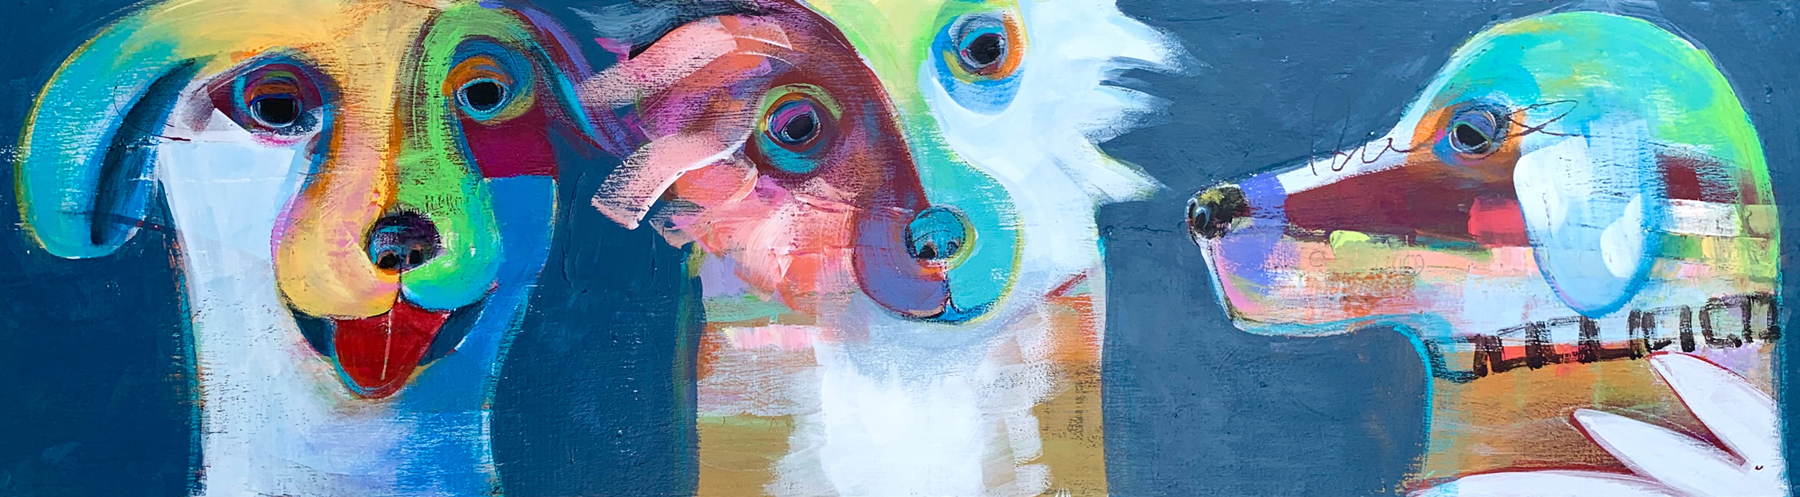 Laura Balombini: Three Dogs Blue